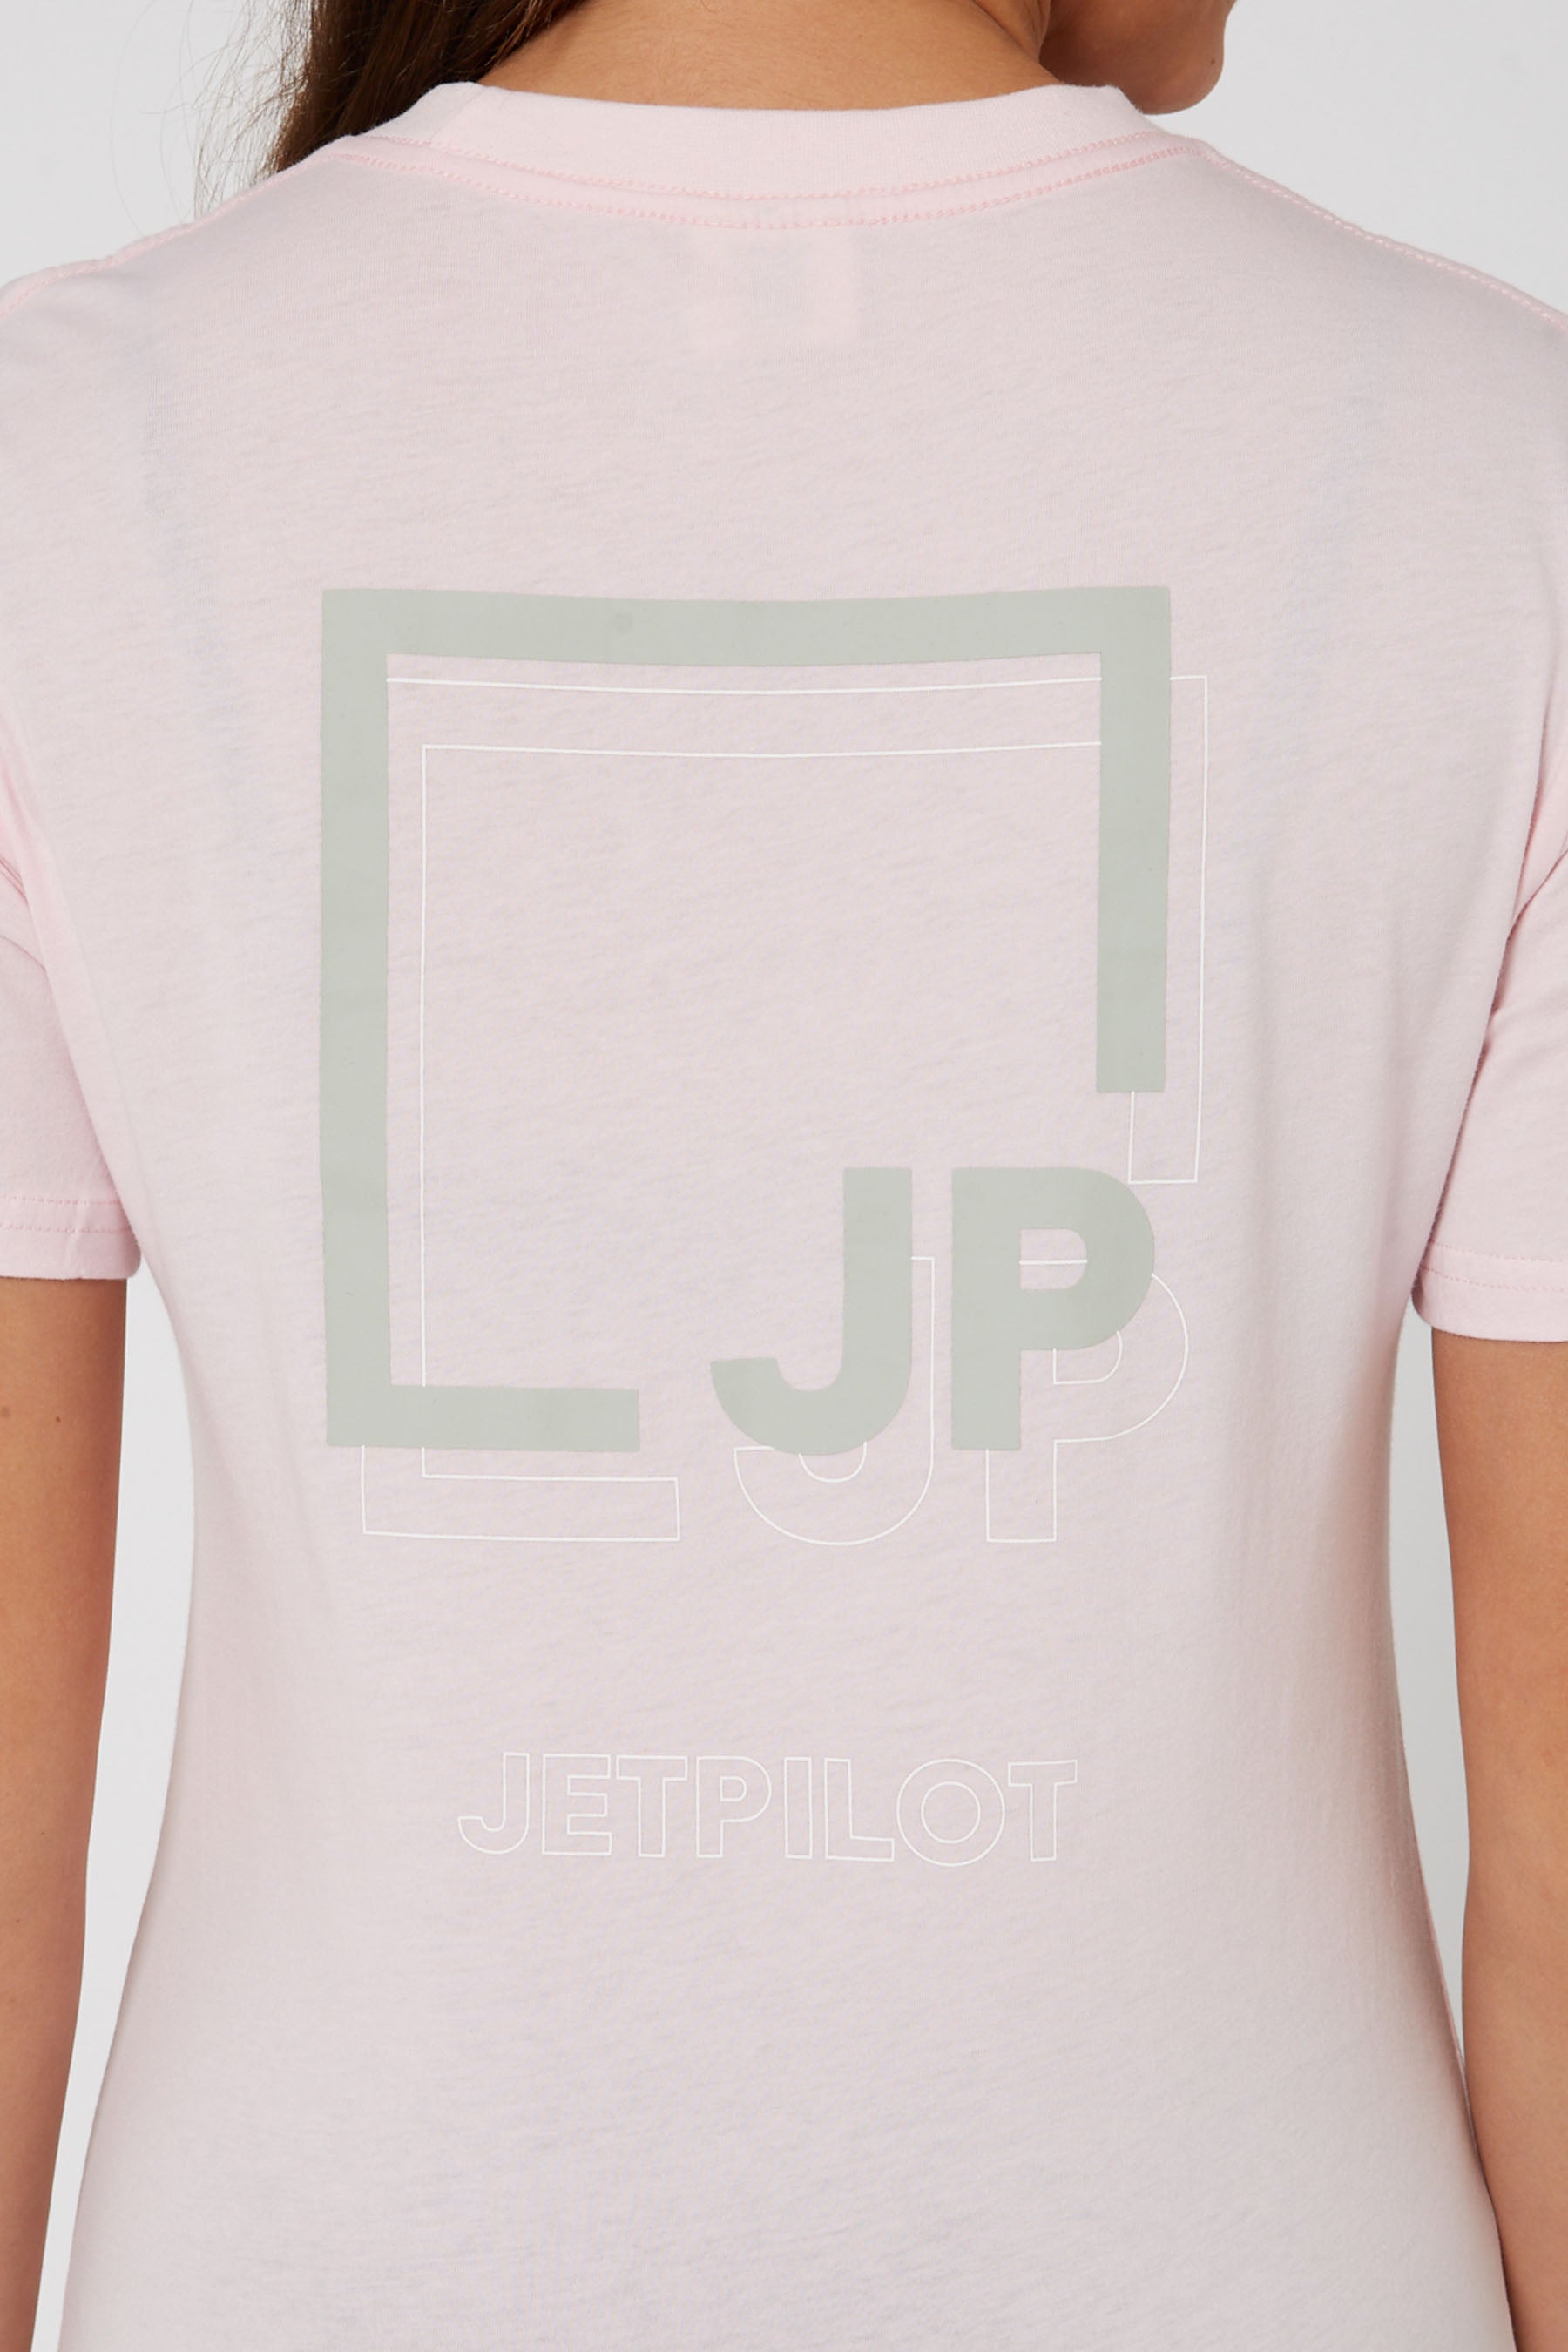 Jetpilot Pacer Ladies Tee - Pink